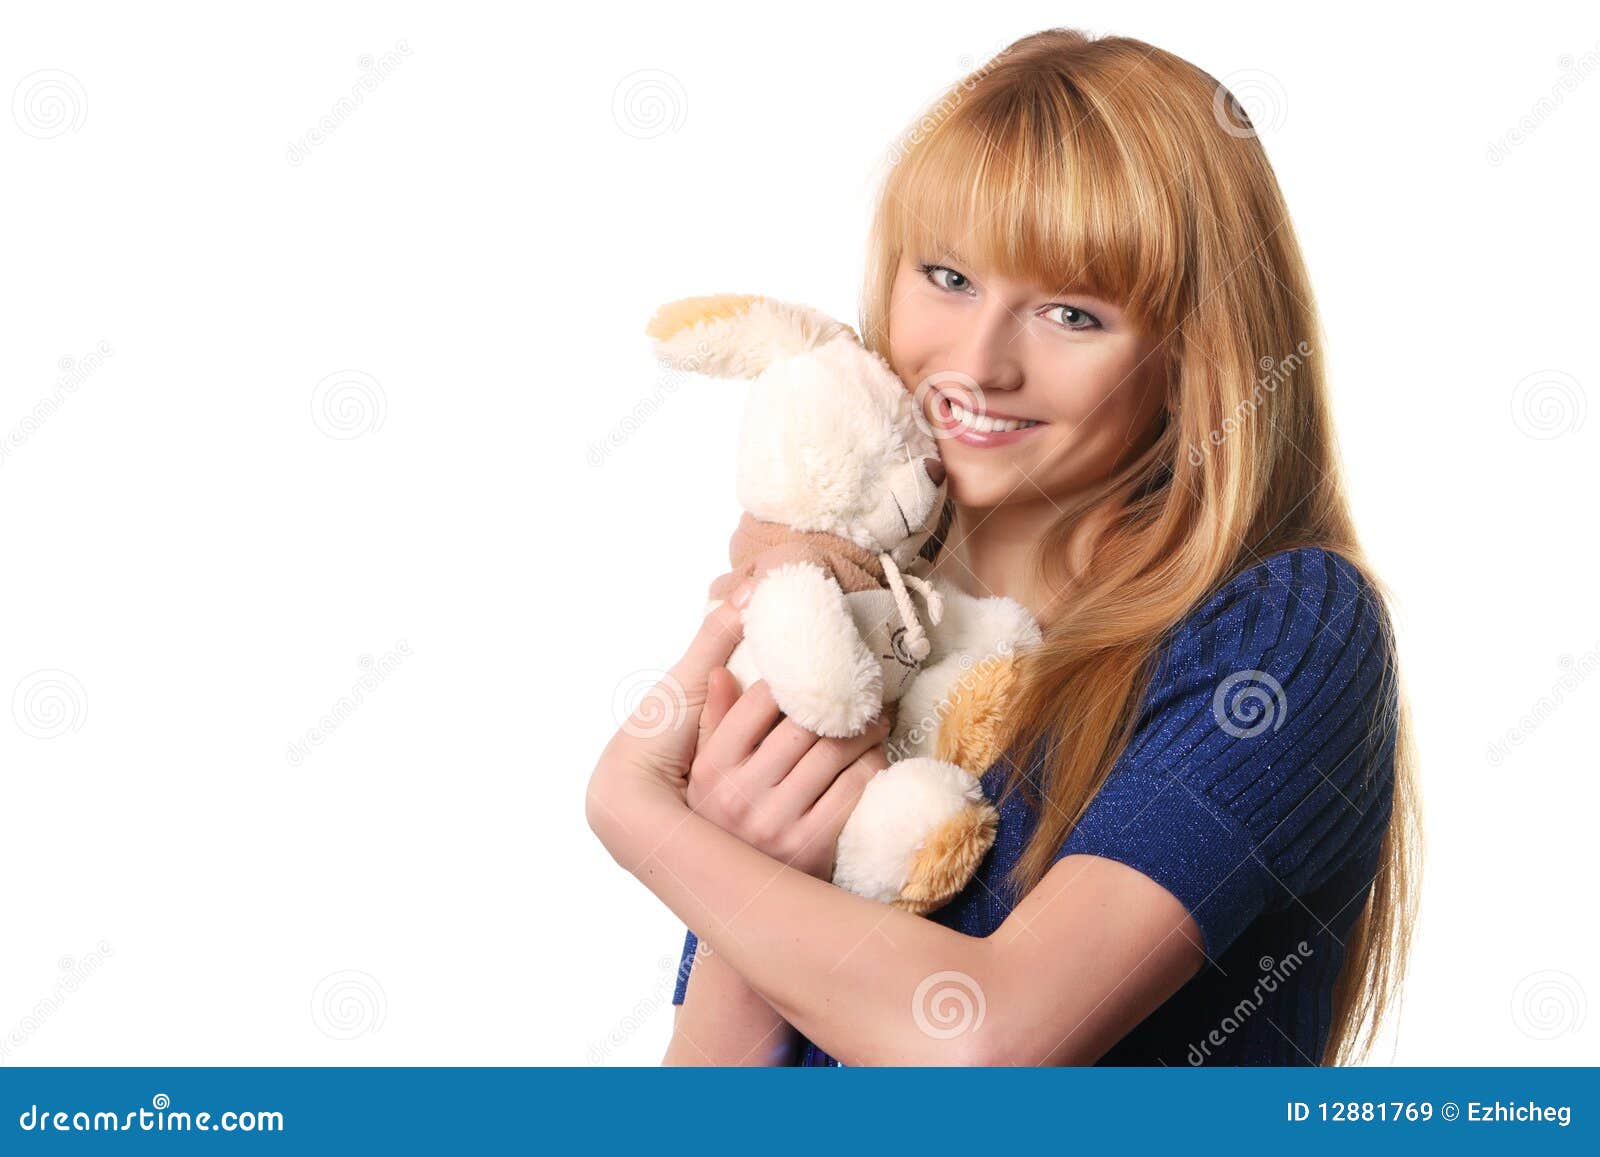 Cuddles stock image. Image of human, caucasian, happiness - 12881769